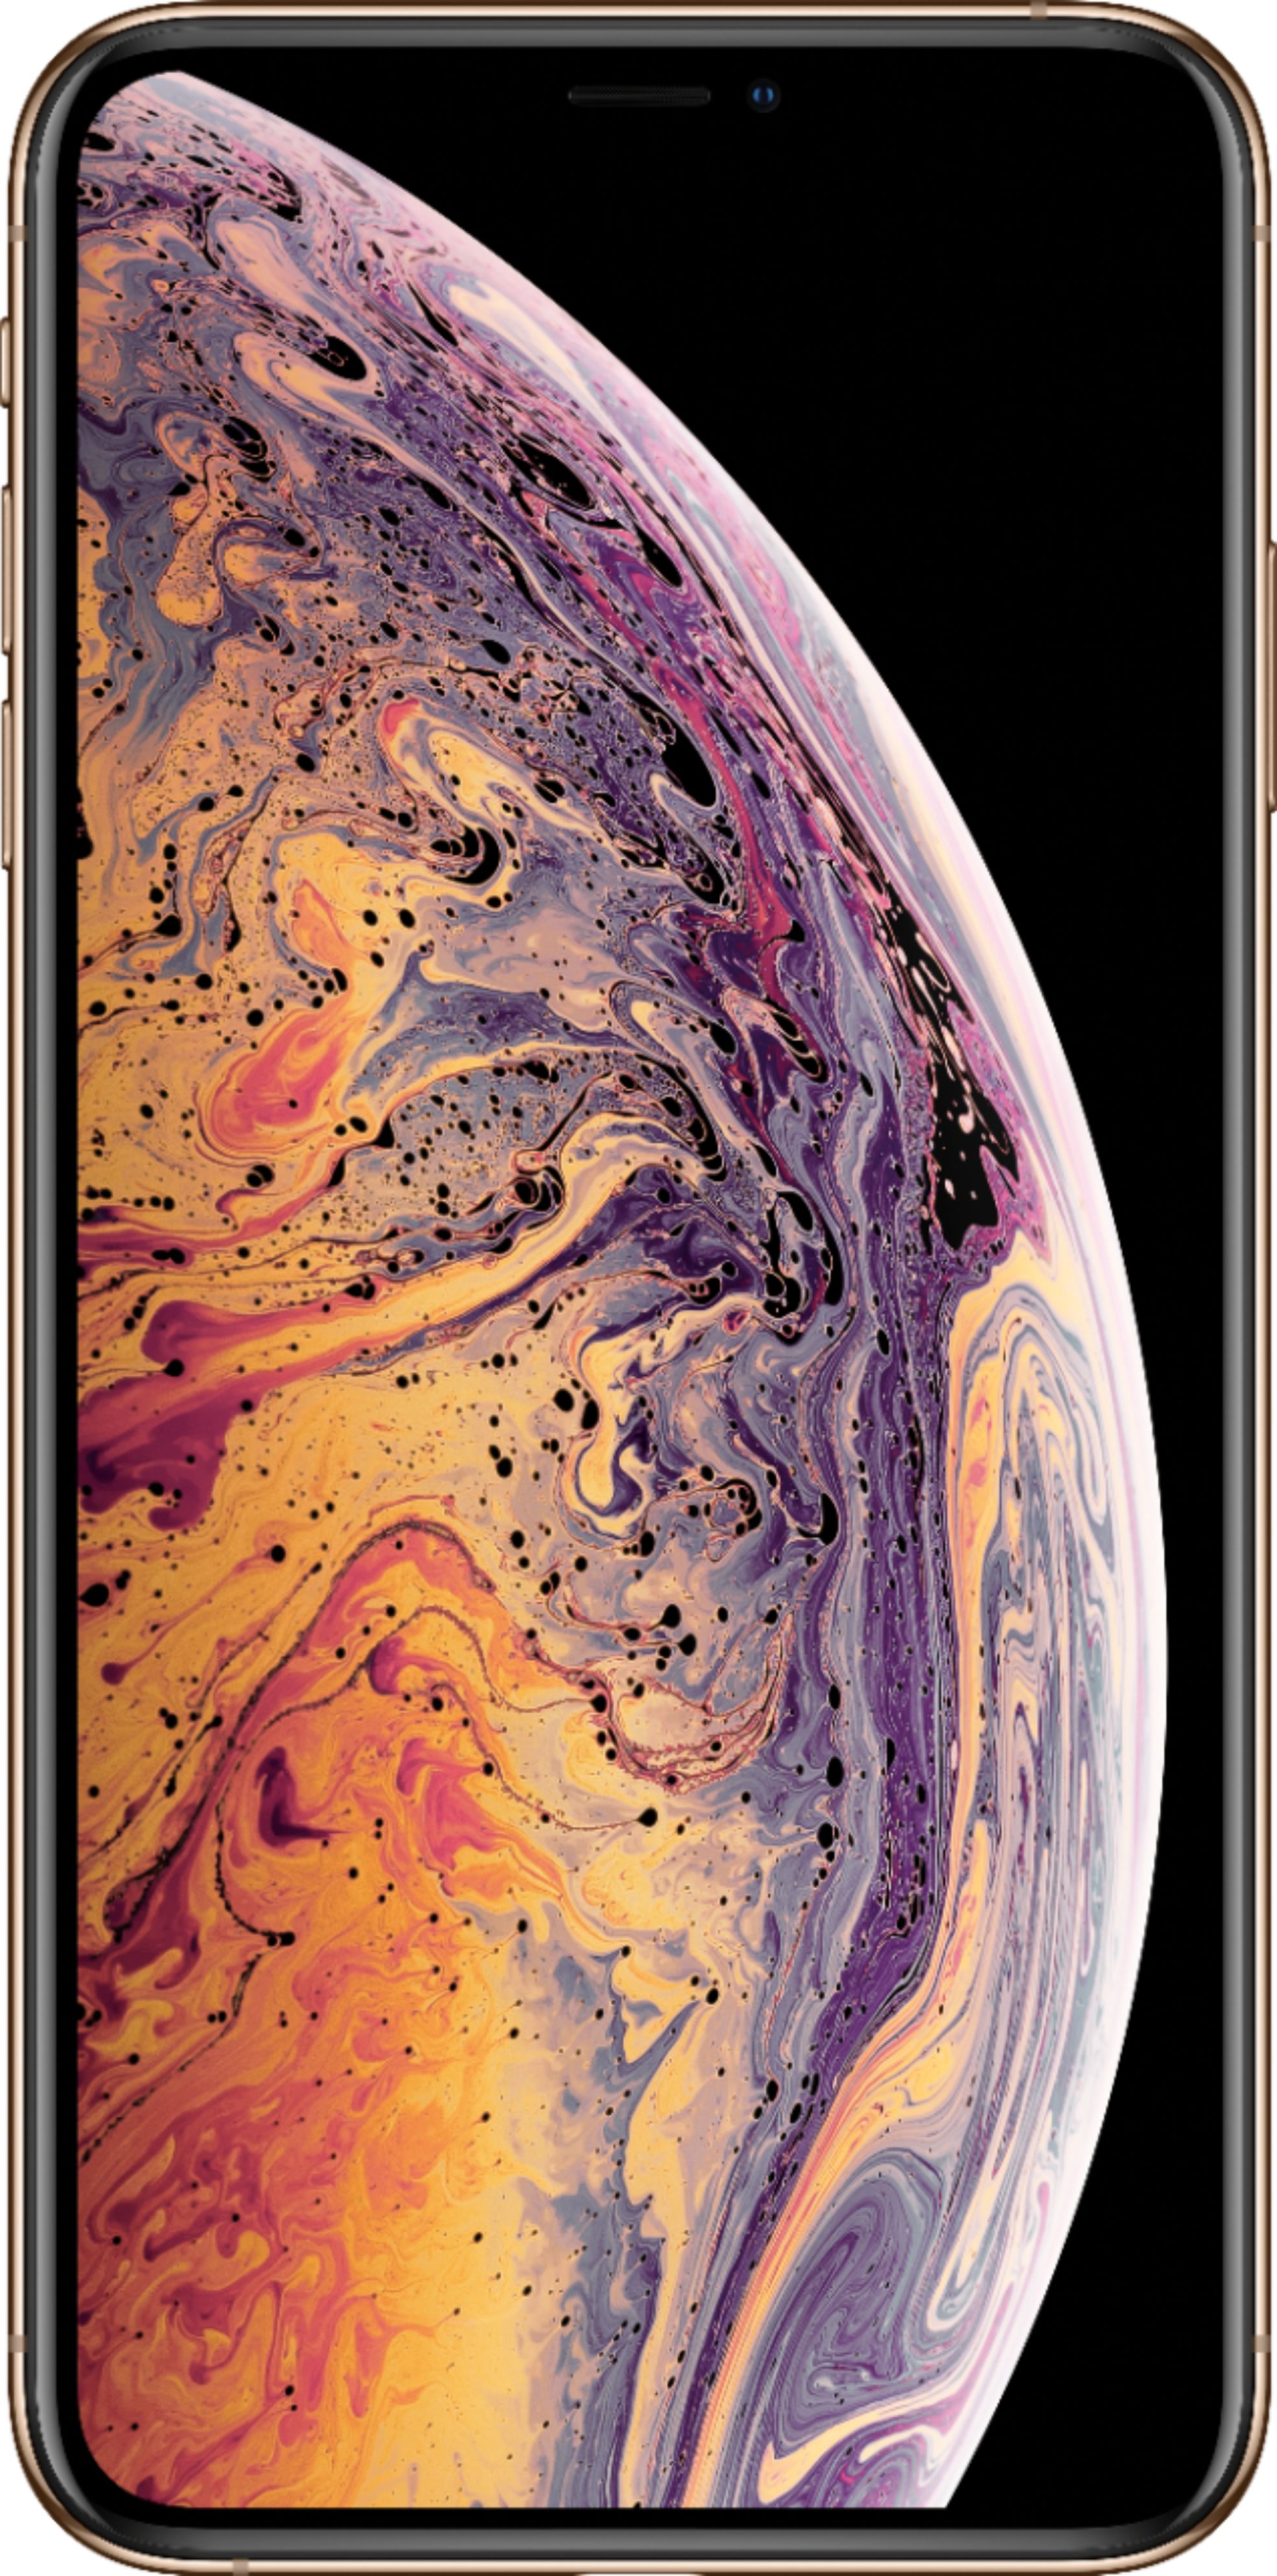 Apple iPhone XS Max 64GB Gold (Sprint) MT5C2LL/A - Best Buy